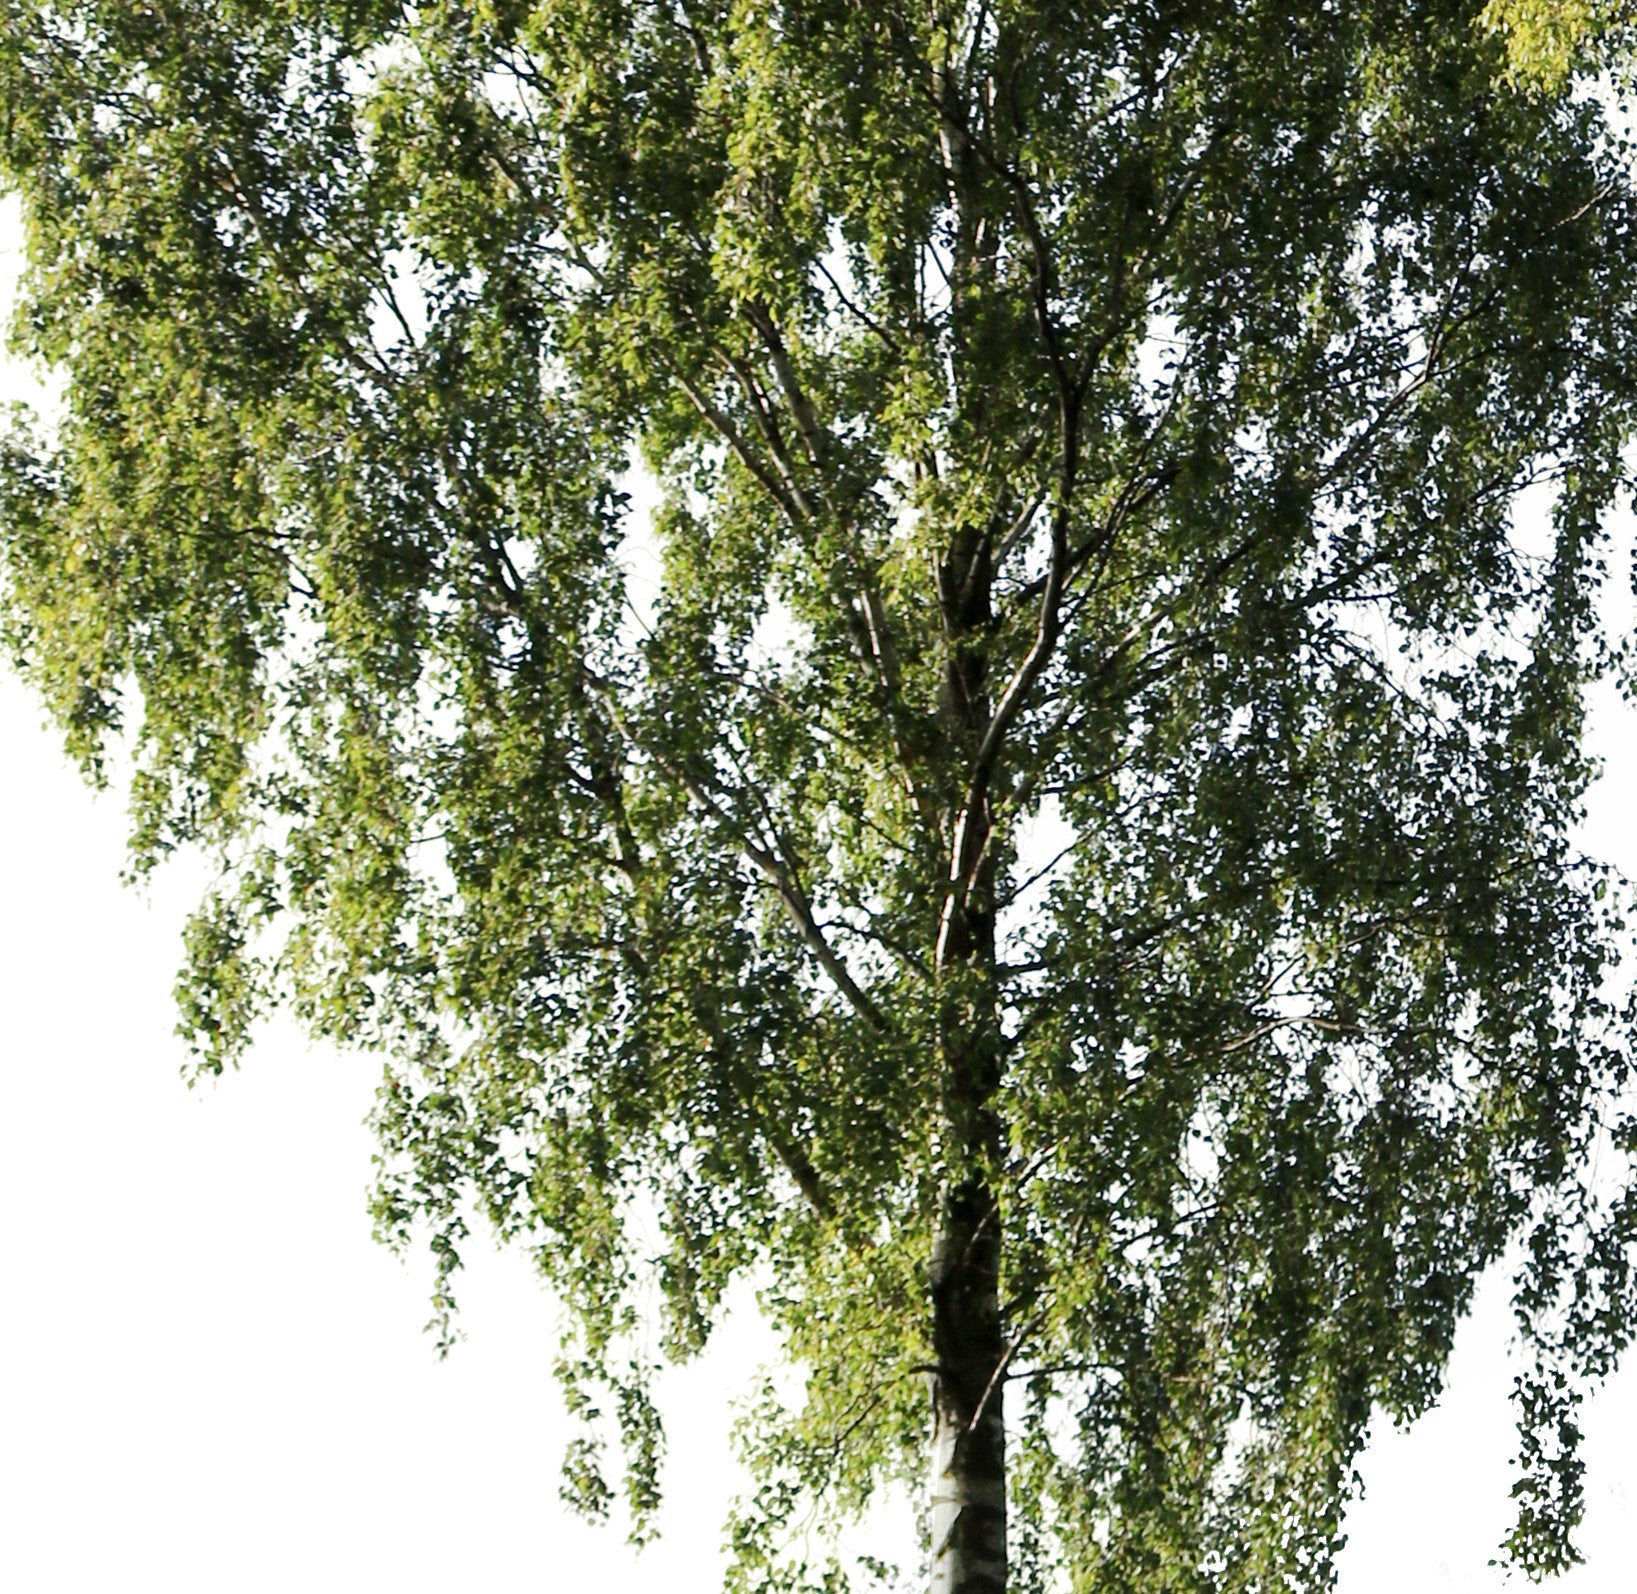 Betula pendula - cutout trees